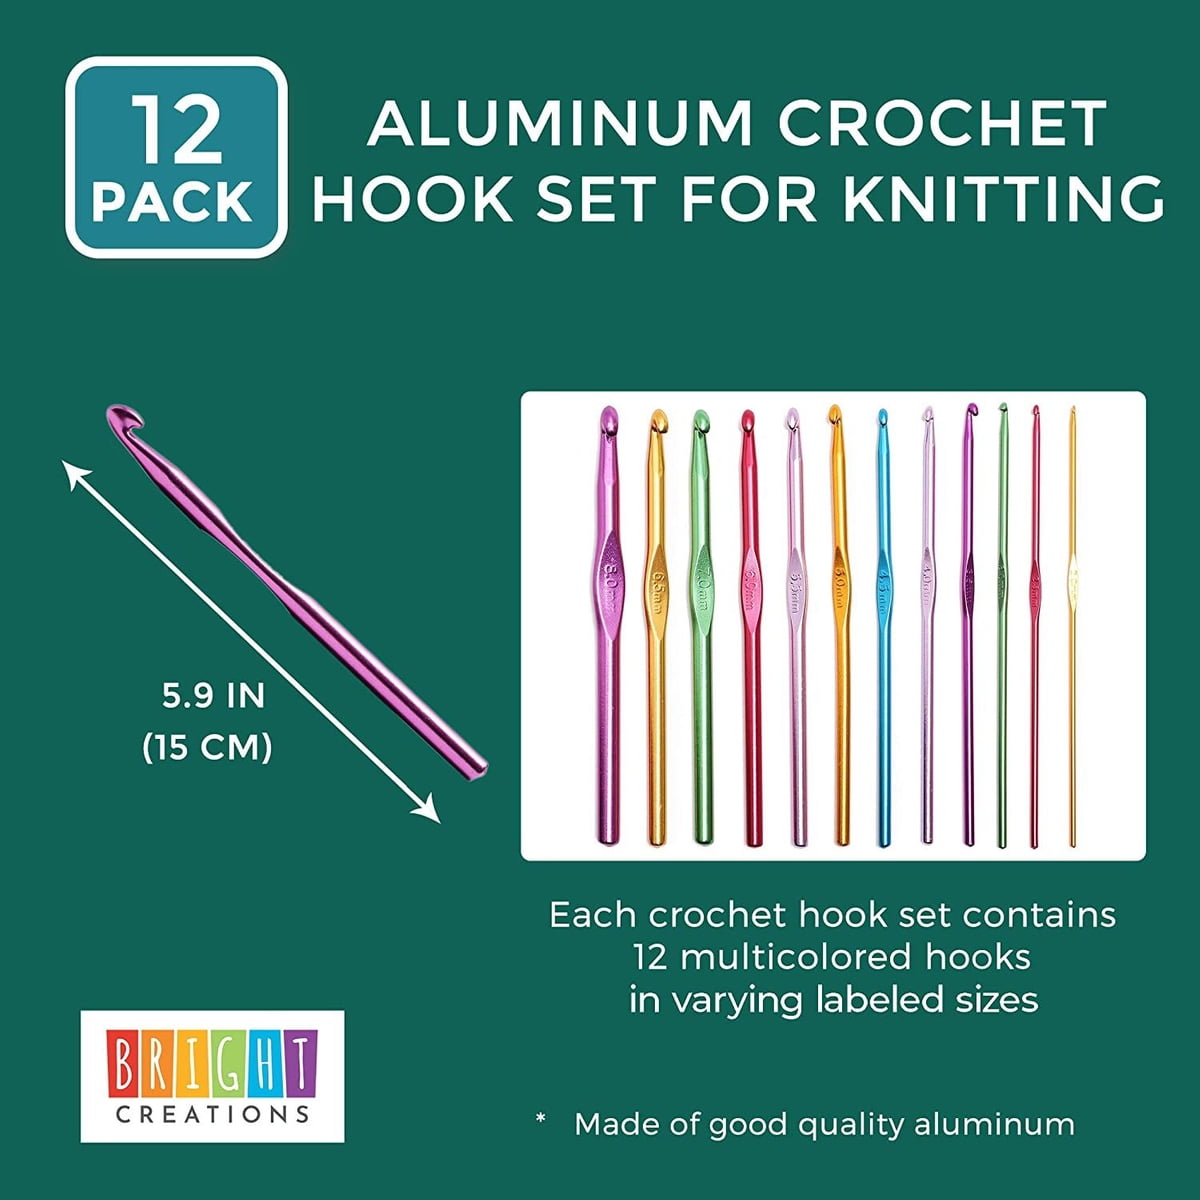 Metal Crochet Hook sizes 2mm to 8mm - Craft Knitting Yarn Needles Weave Need